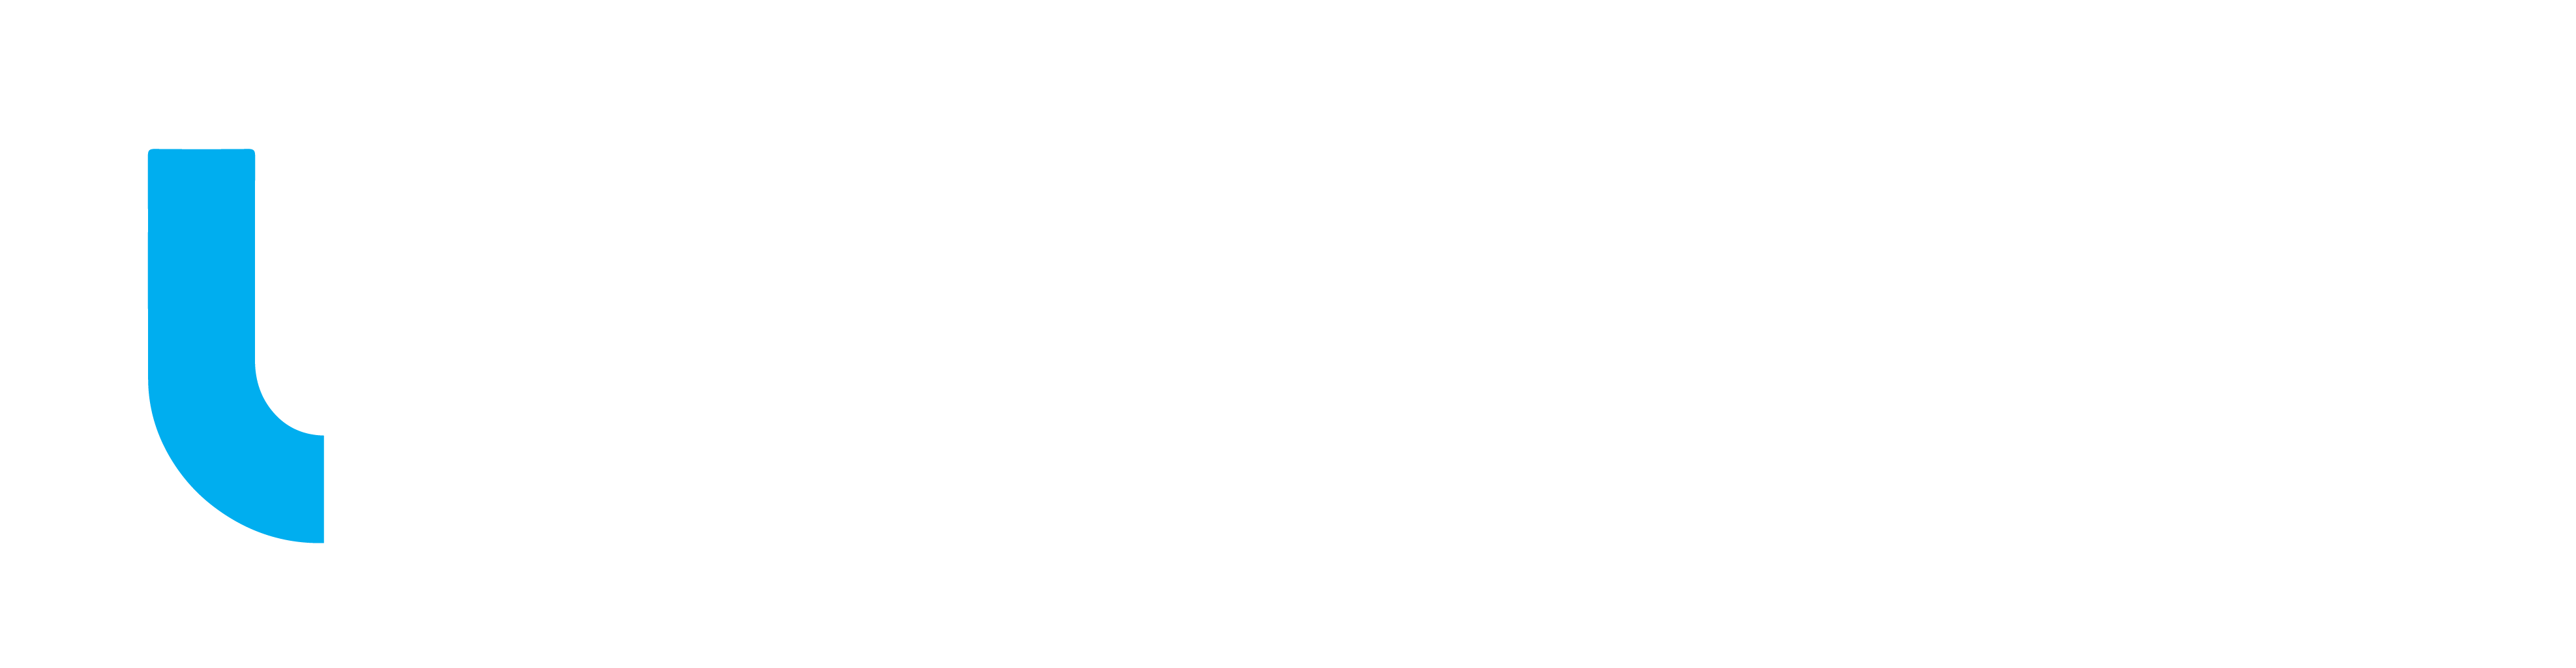 u-report_logo_transparent_for_black_backg_eng_rgb_horizontal